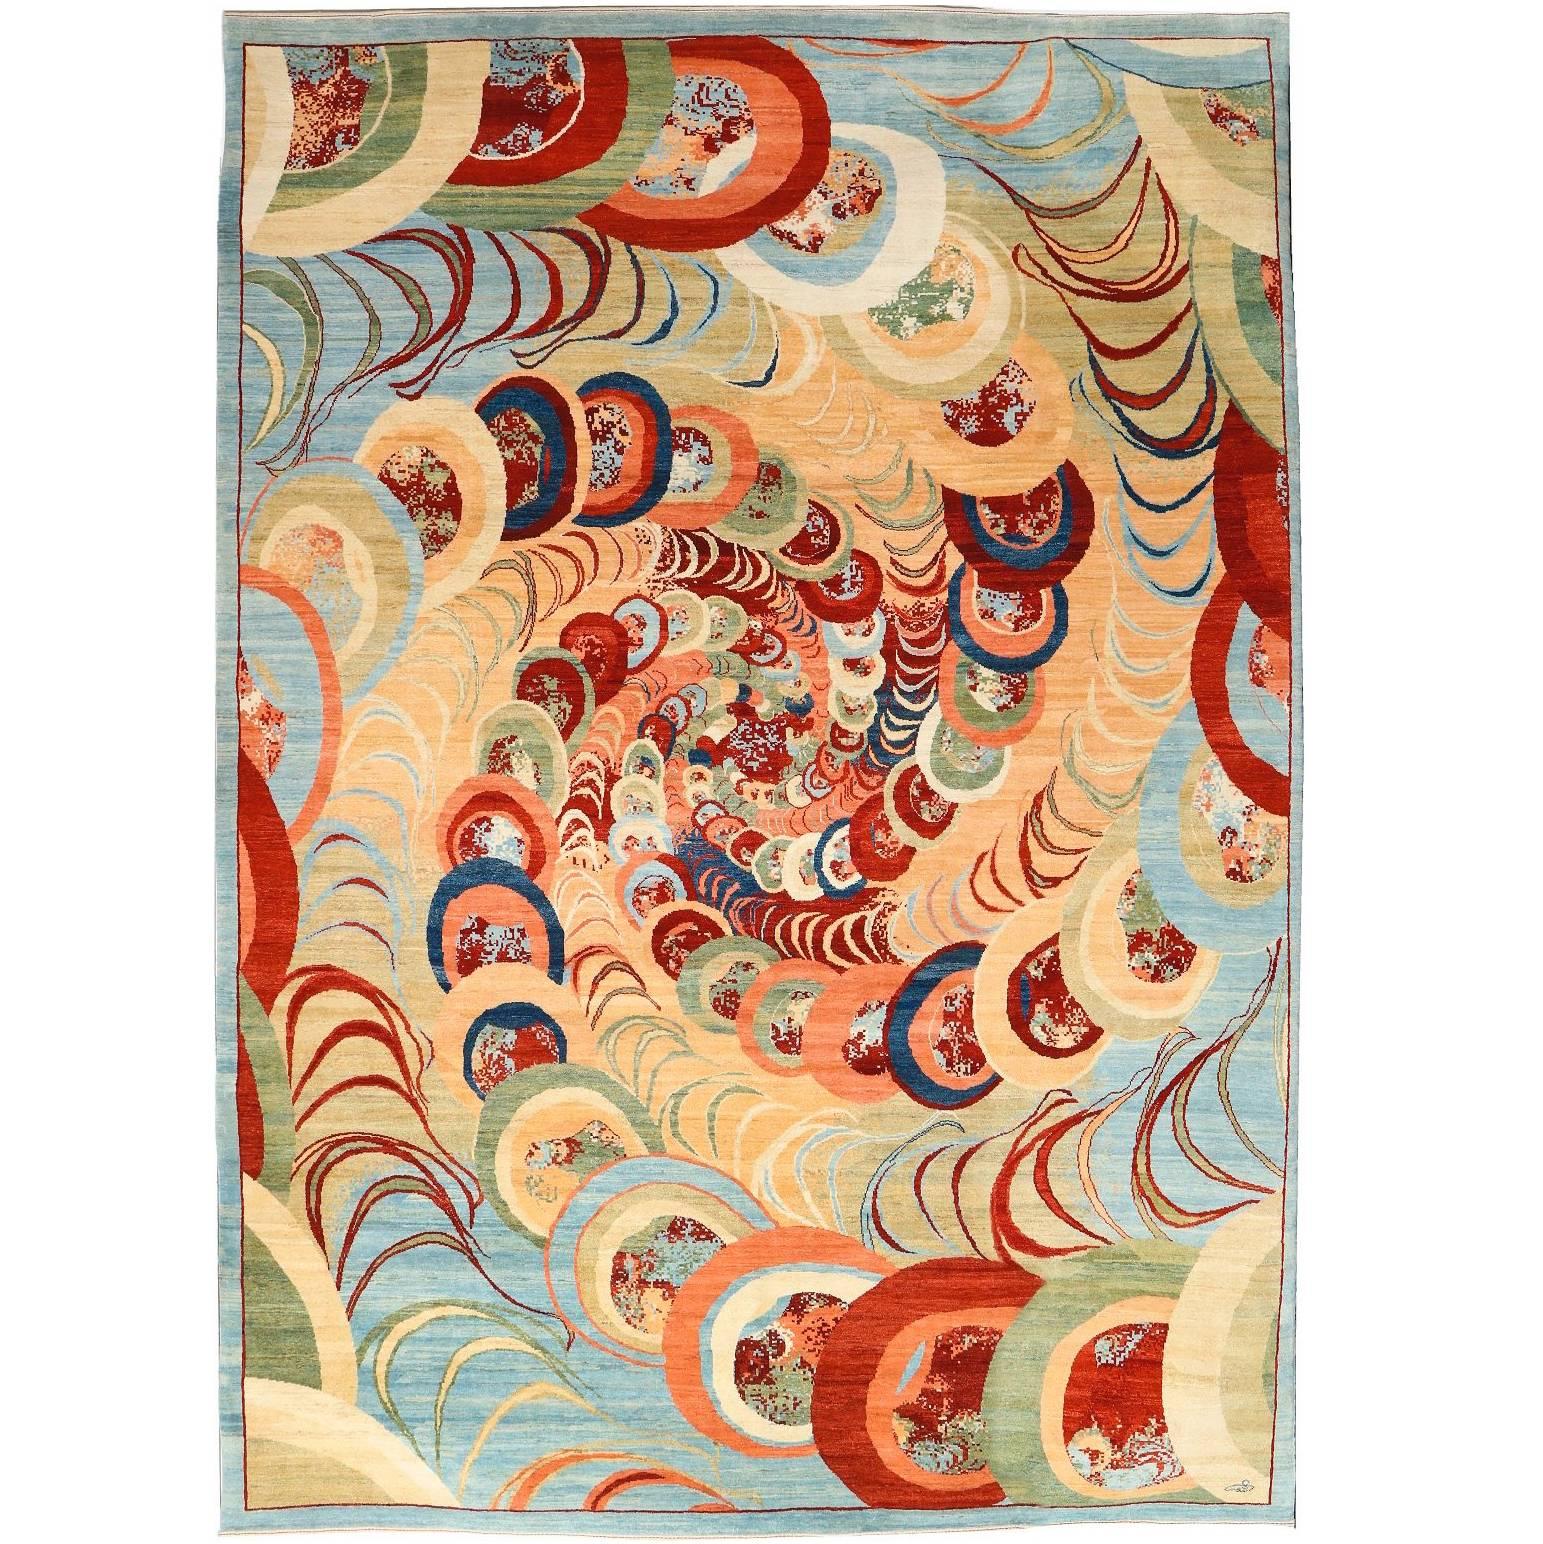 Orley Shabahang "Kaleidoscope" Contemporary Persian Rug, 9' x 12'